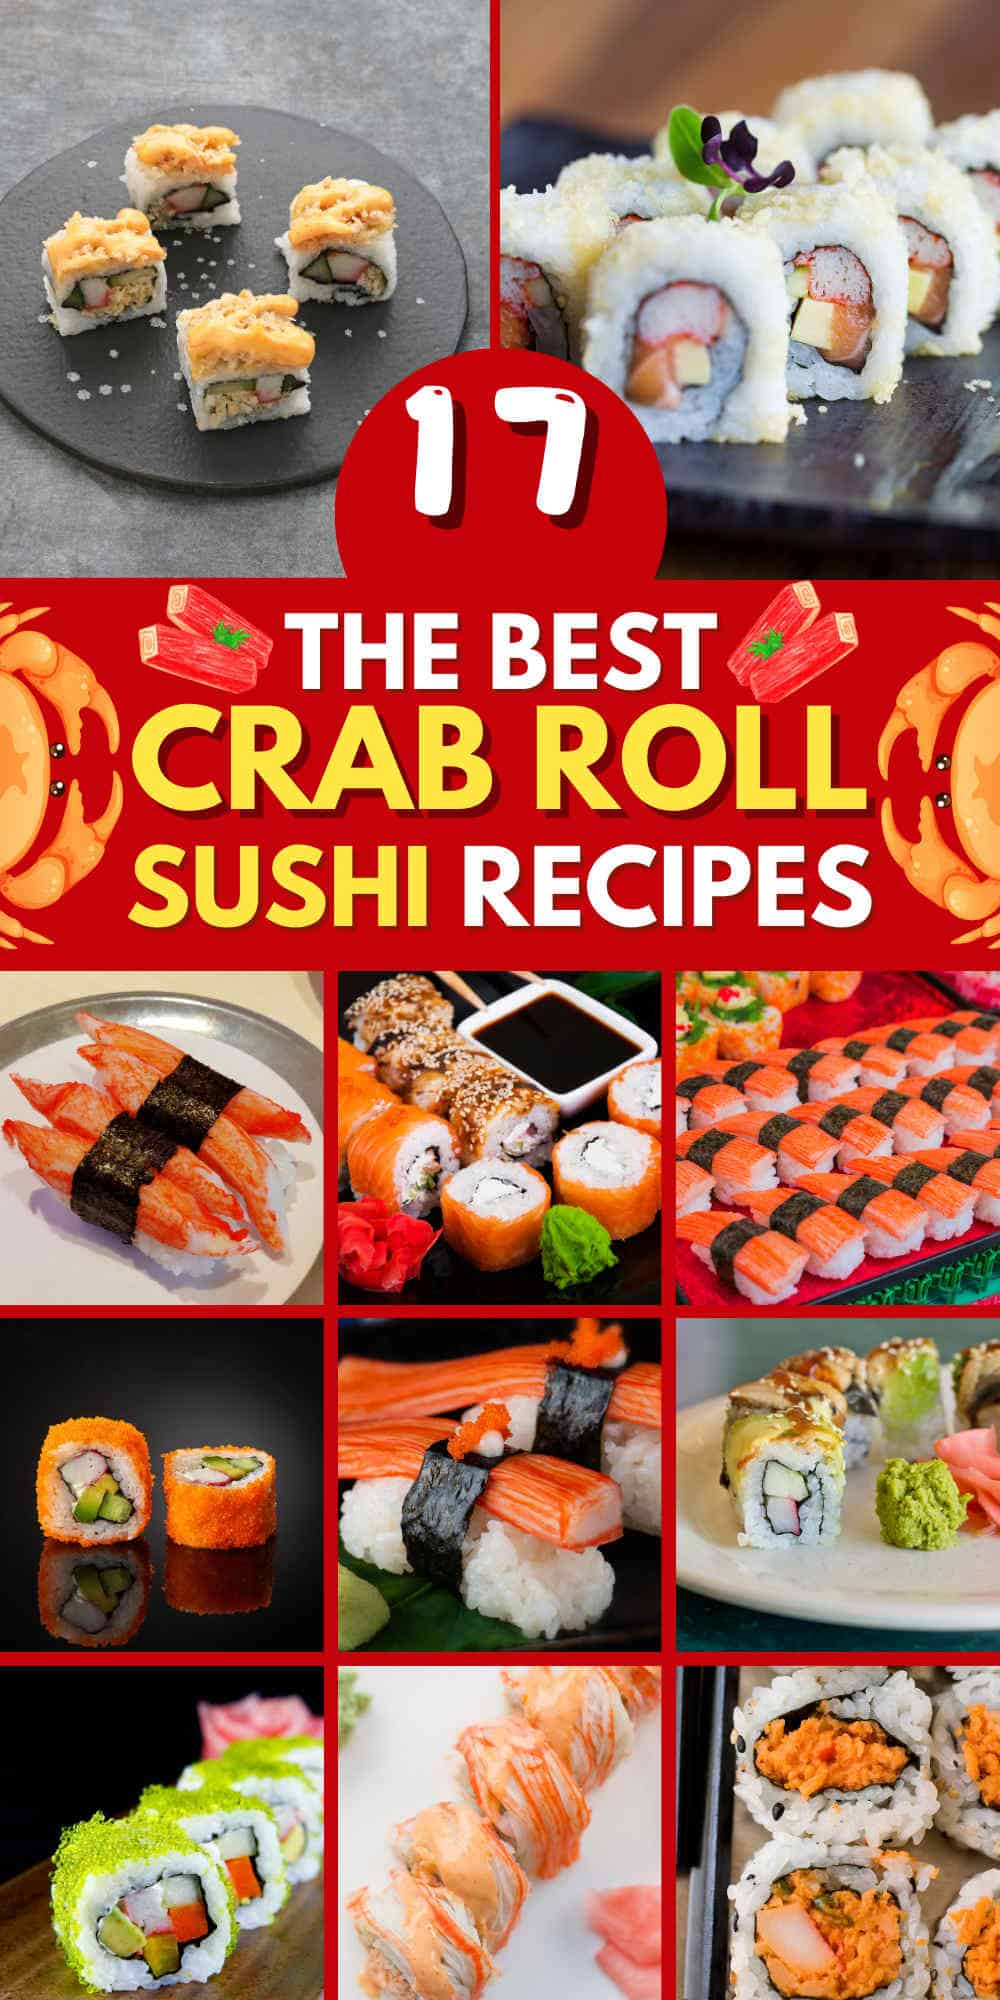 crab roll sushi recipes